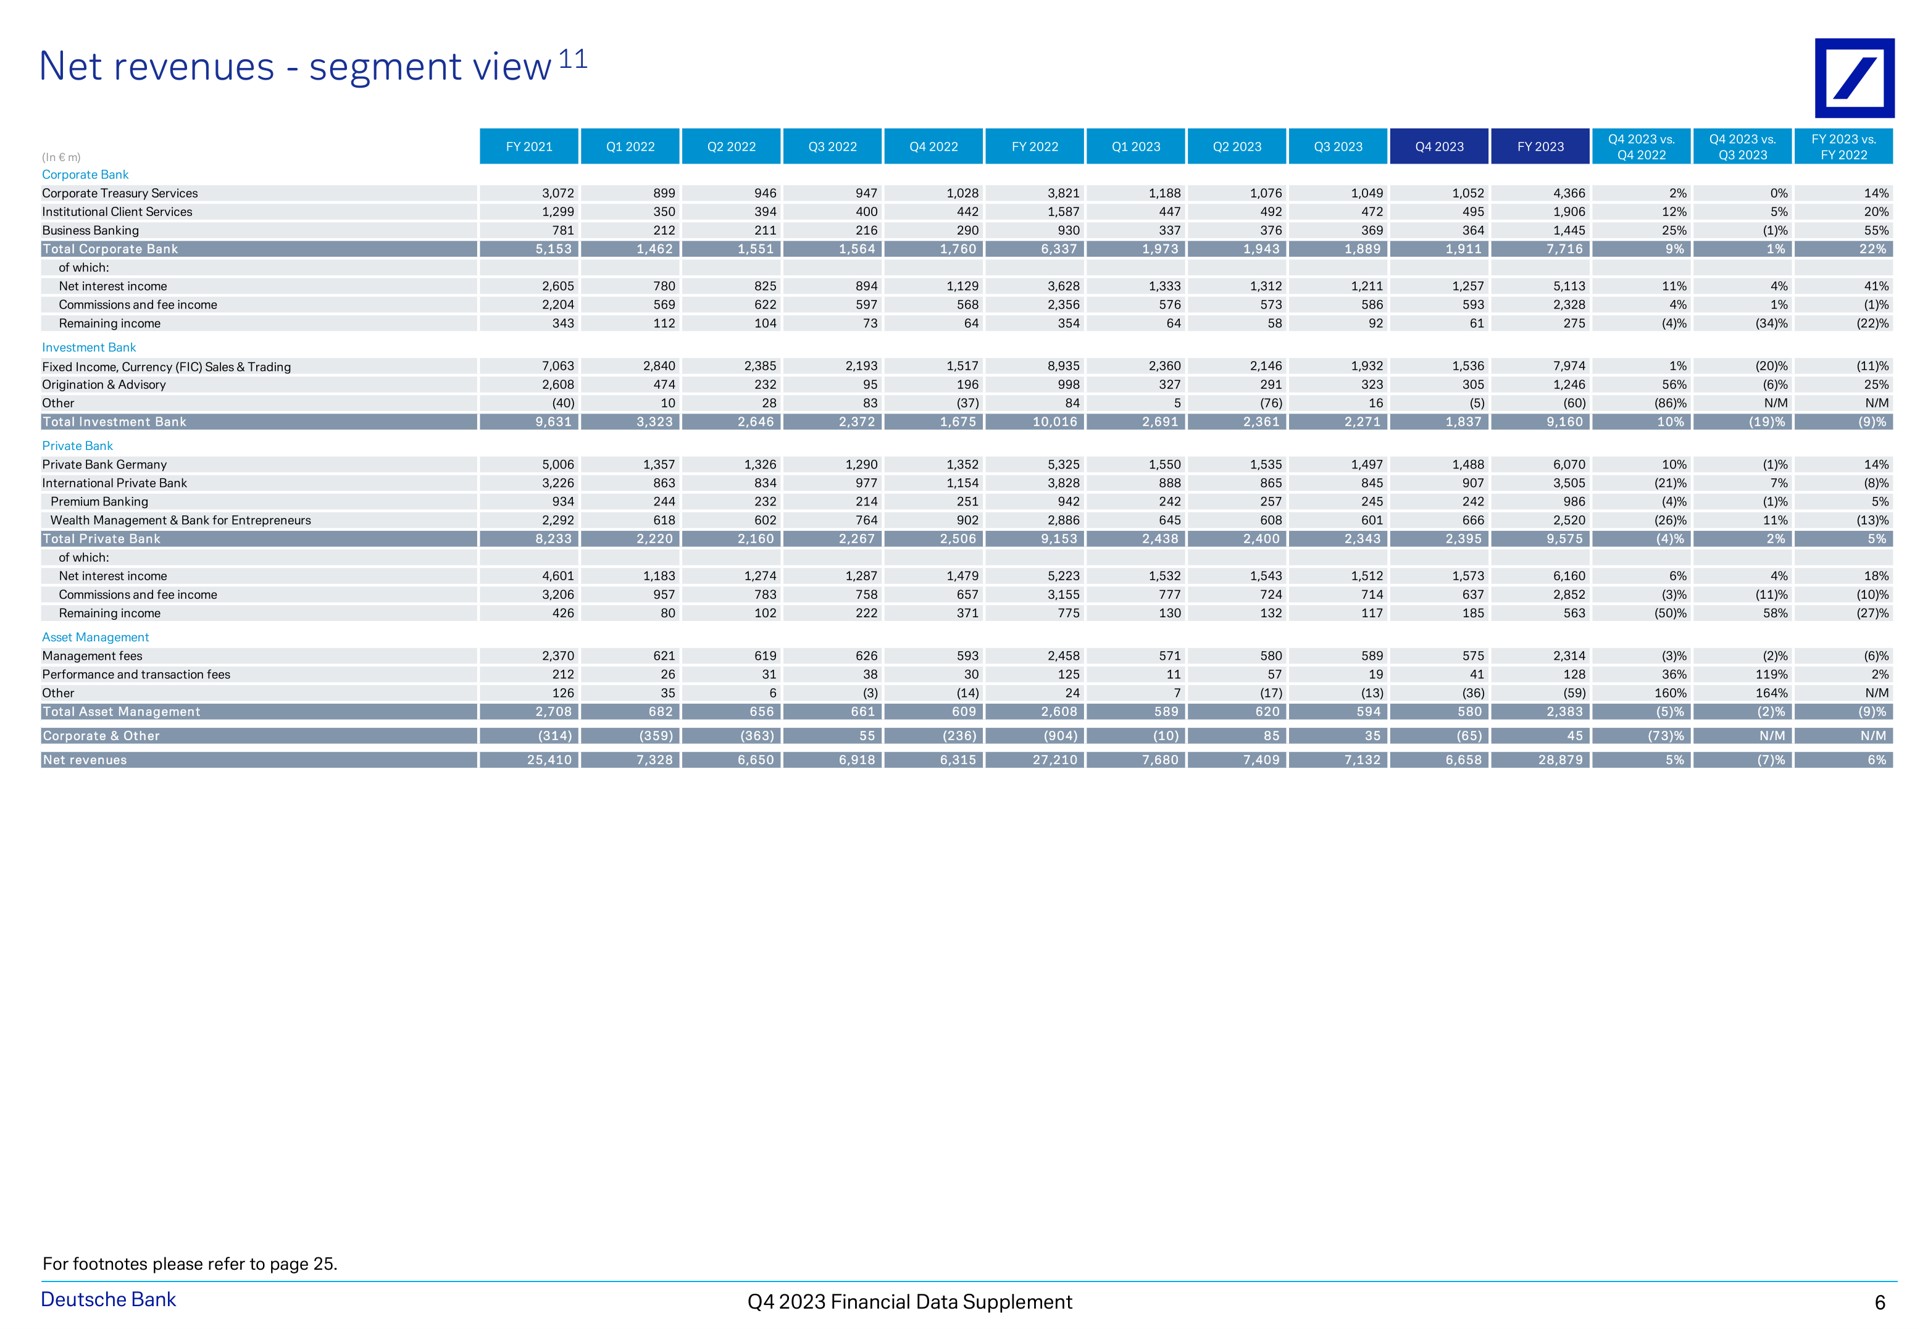 net revenues segment view arete a a tig zag a ase a a saa a a a bank financial data supplement | Deutsche Bank